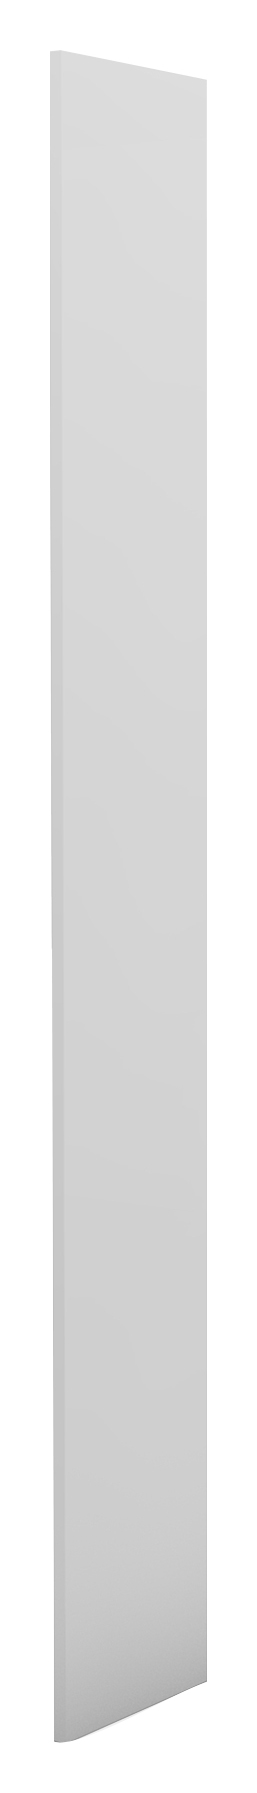 Image of Duarti By Calypso Swhite Varnish Universal High Rise End / Slimline Infill Panel Slimline - 220 x 2035 x 18mm